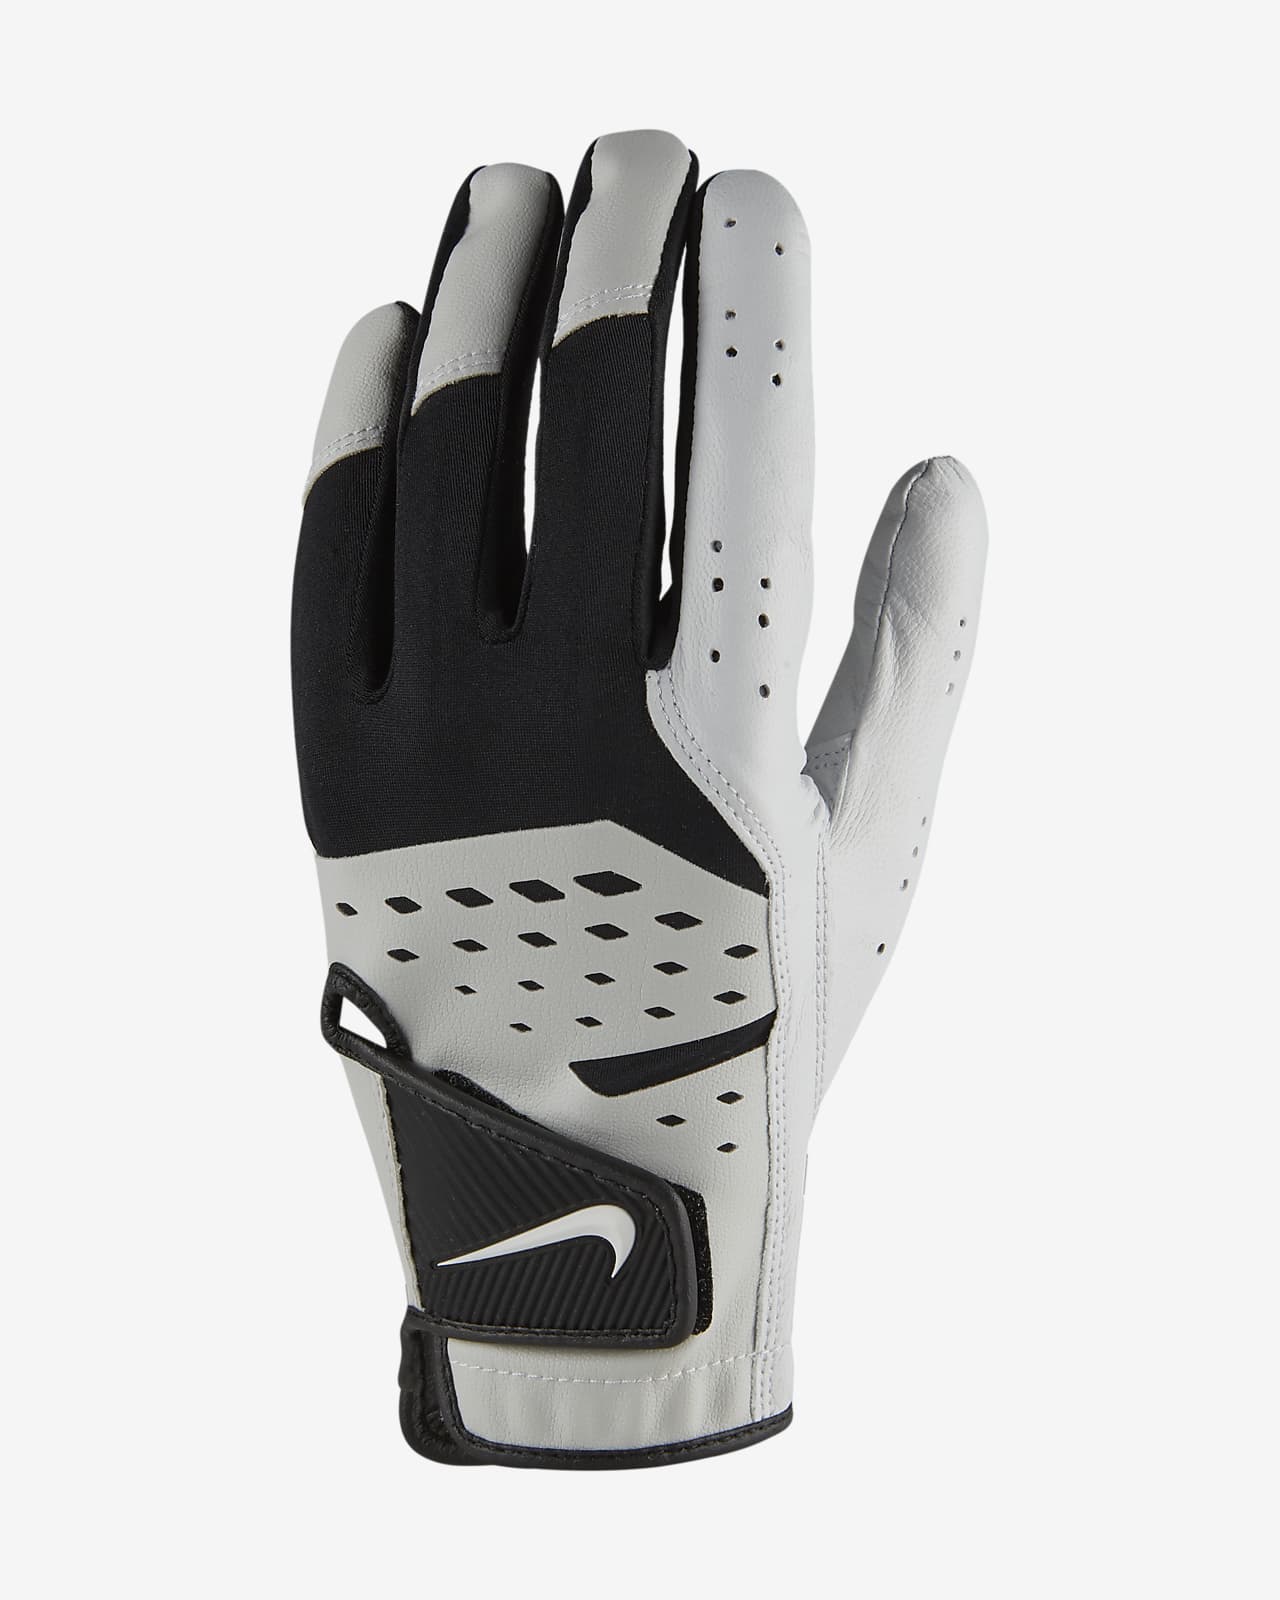 Nike Tech Extreme 7 Golf Glove (Left Regular). Nike JP